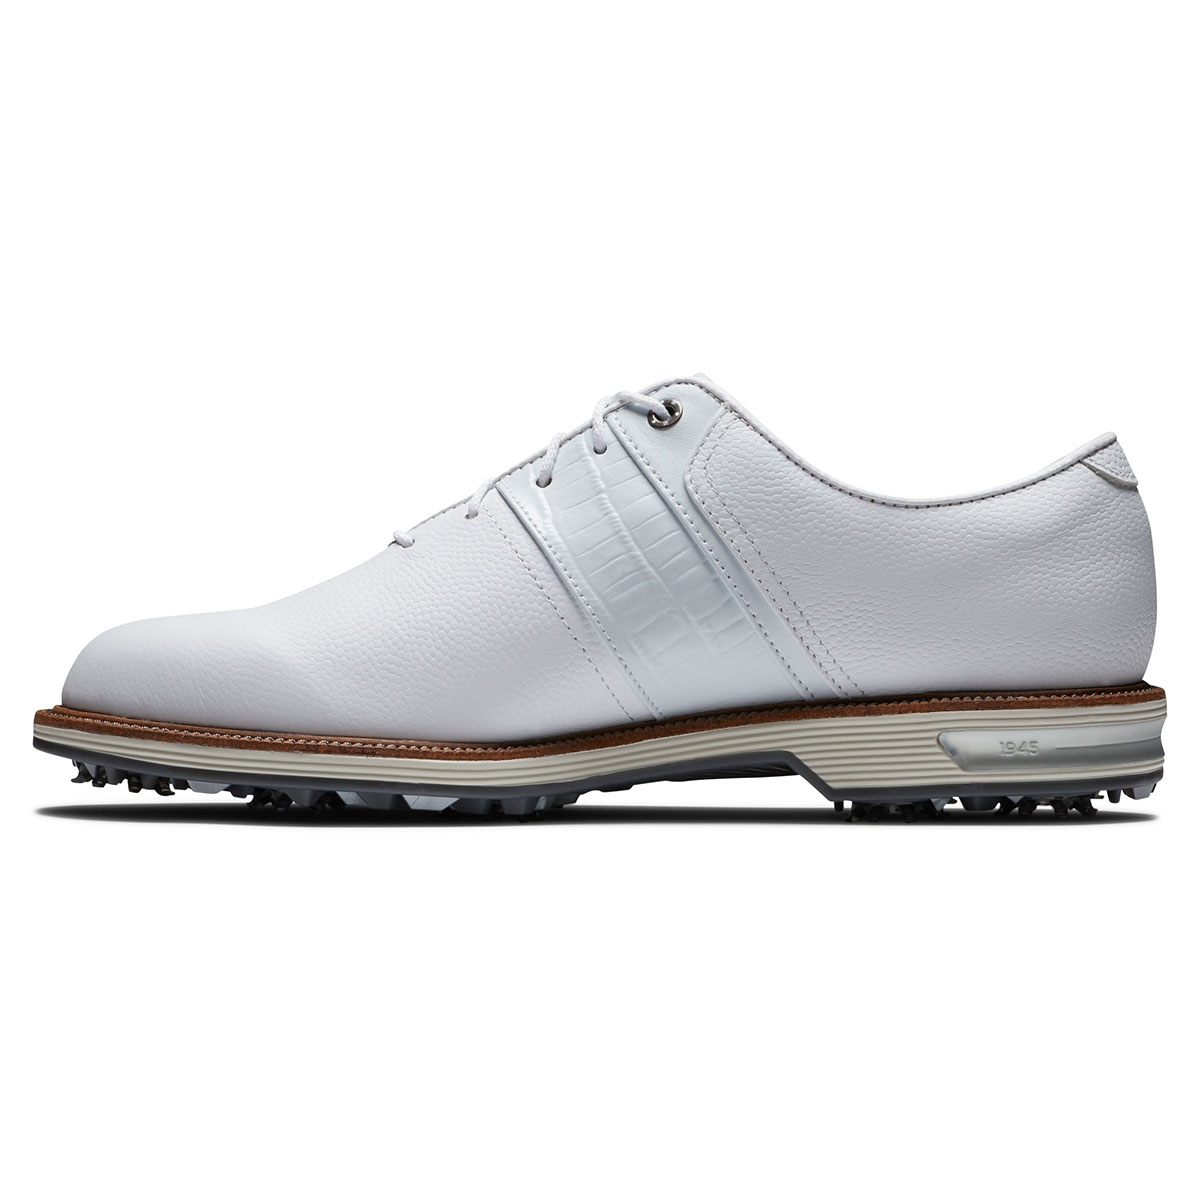 FootJoy Men's Premiere Packard Waterproof Spiked Golf Shoes from ...